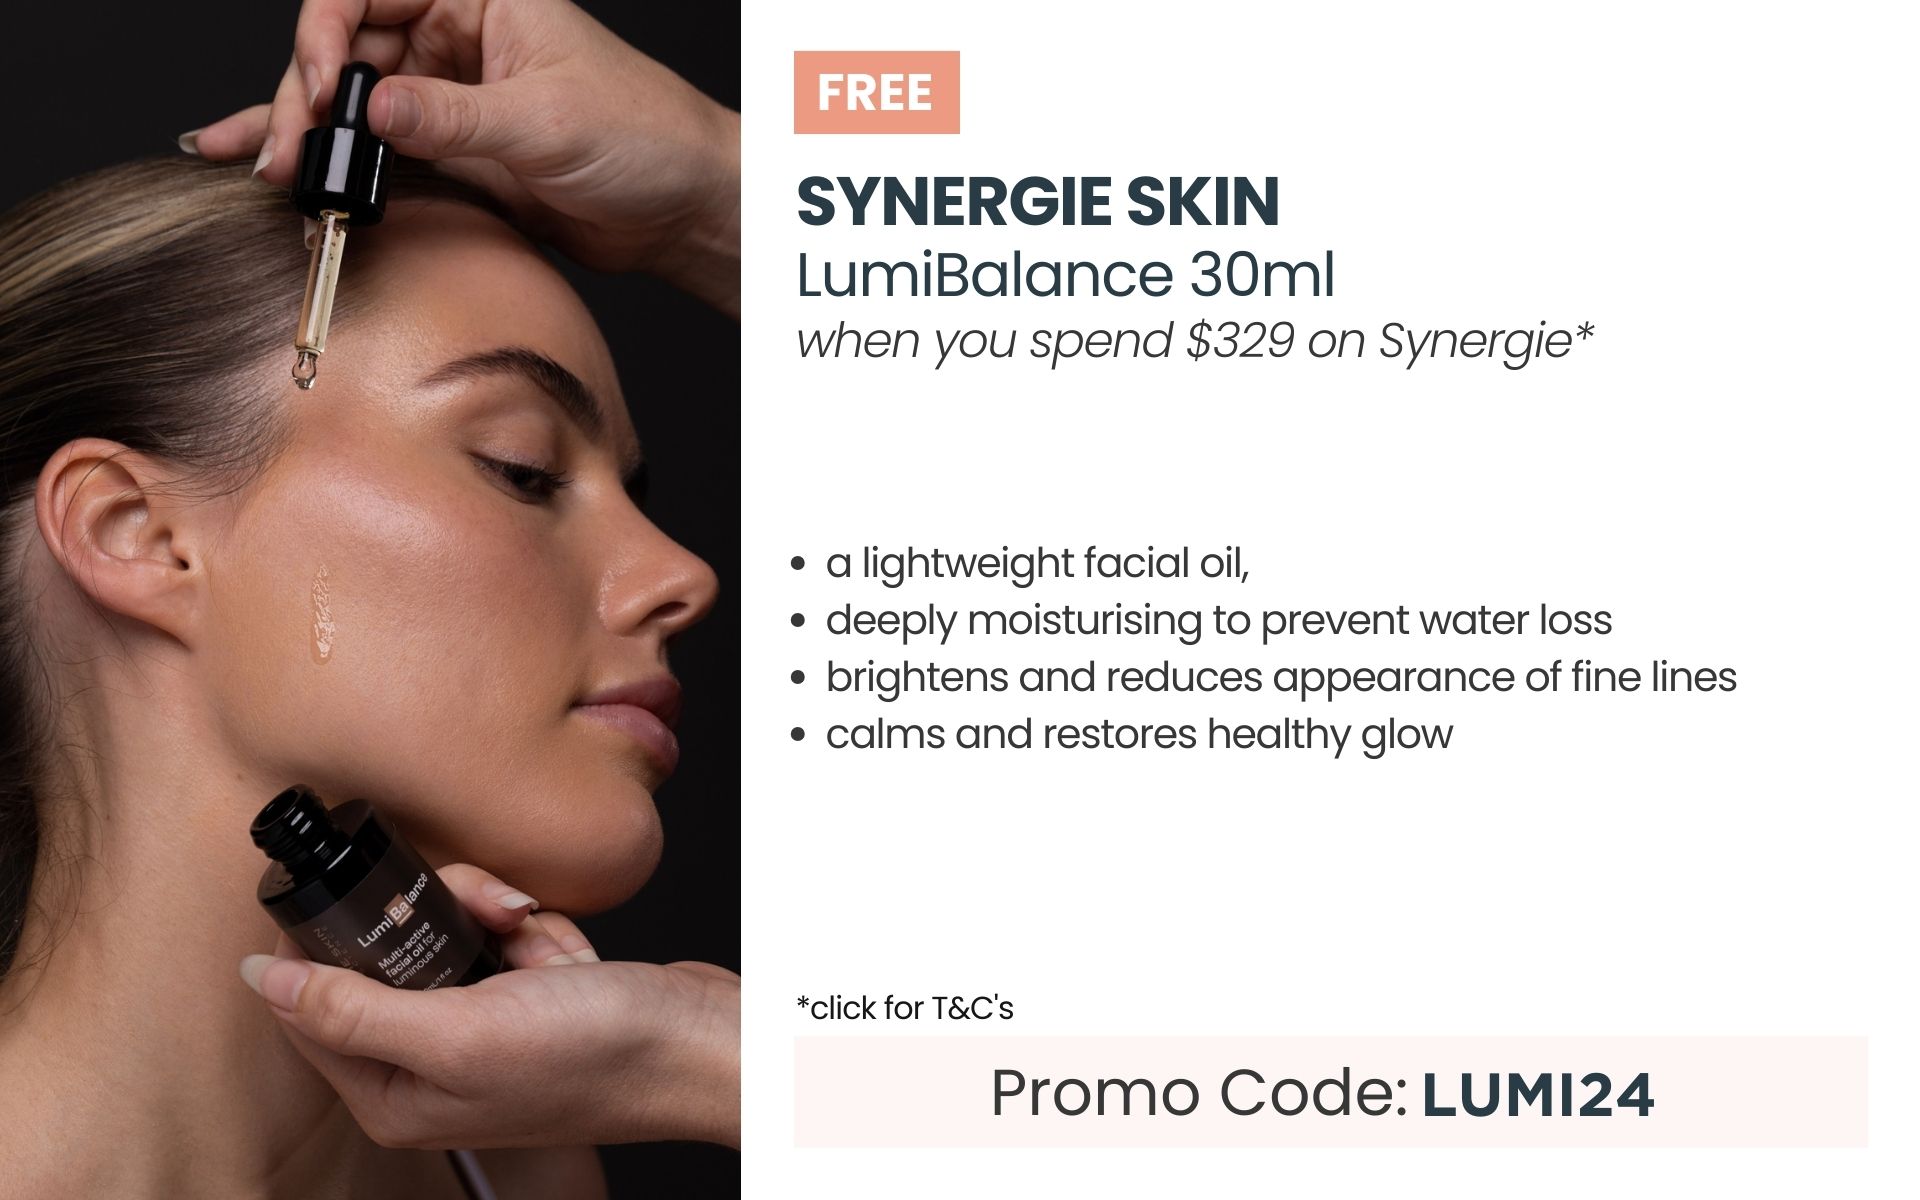 FREE Synergie Skin LumiBalance 30ml worth $120. Min spend $329 on Synergie. Promo Code: LUMI24.